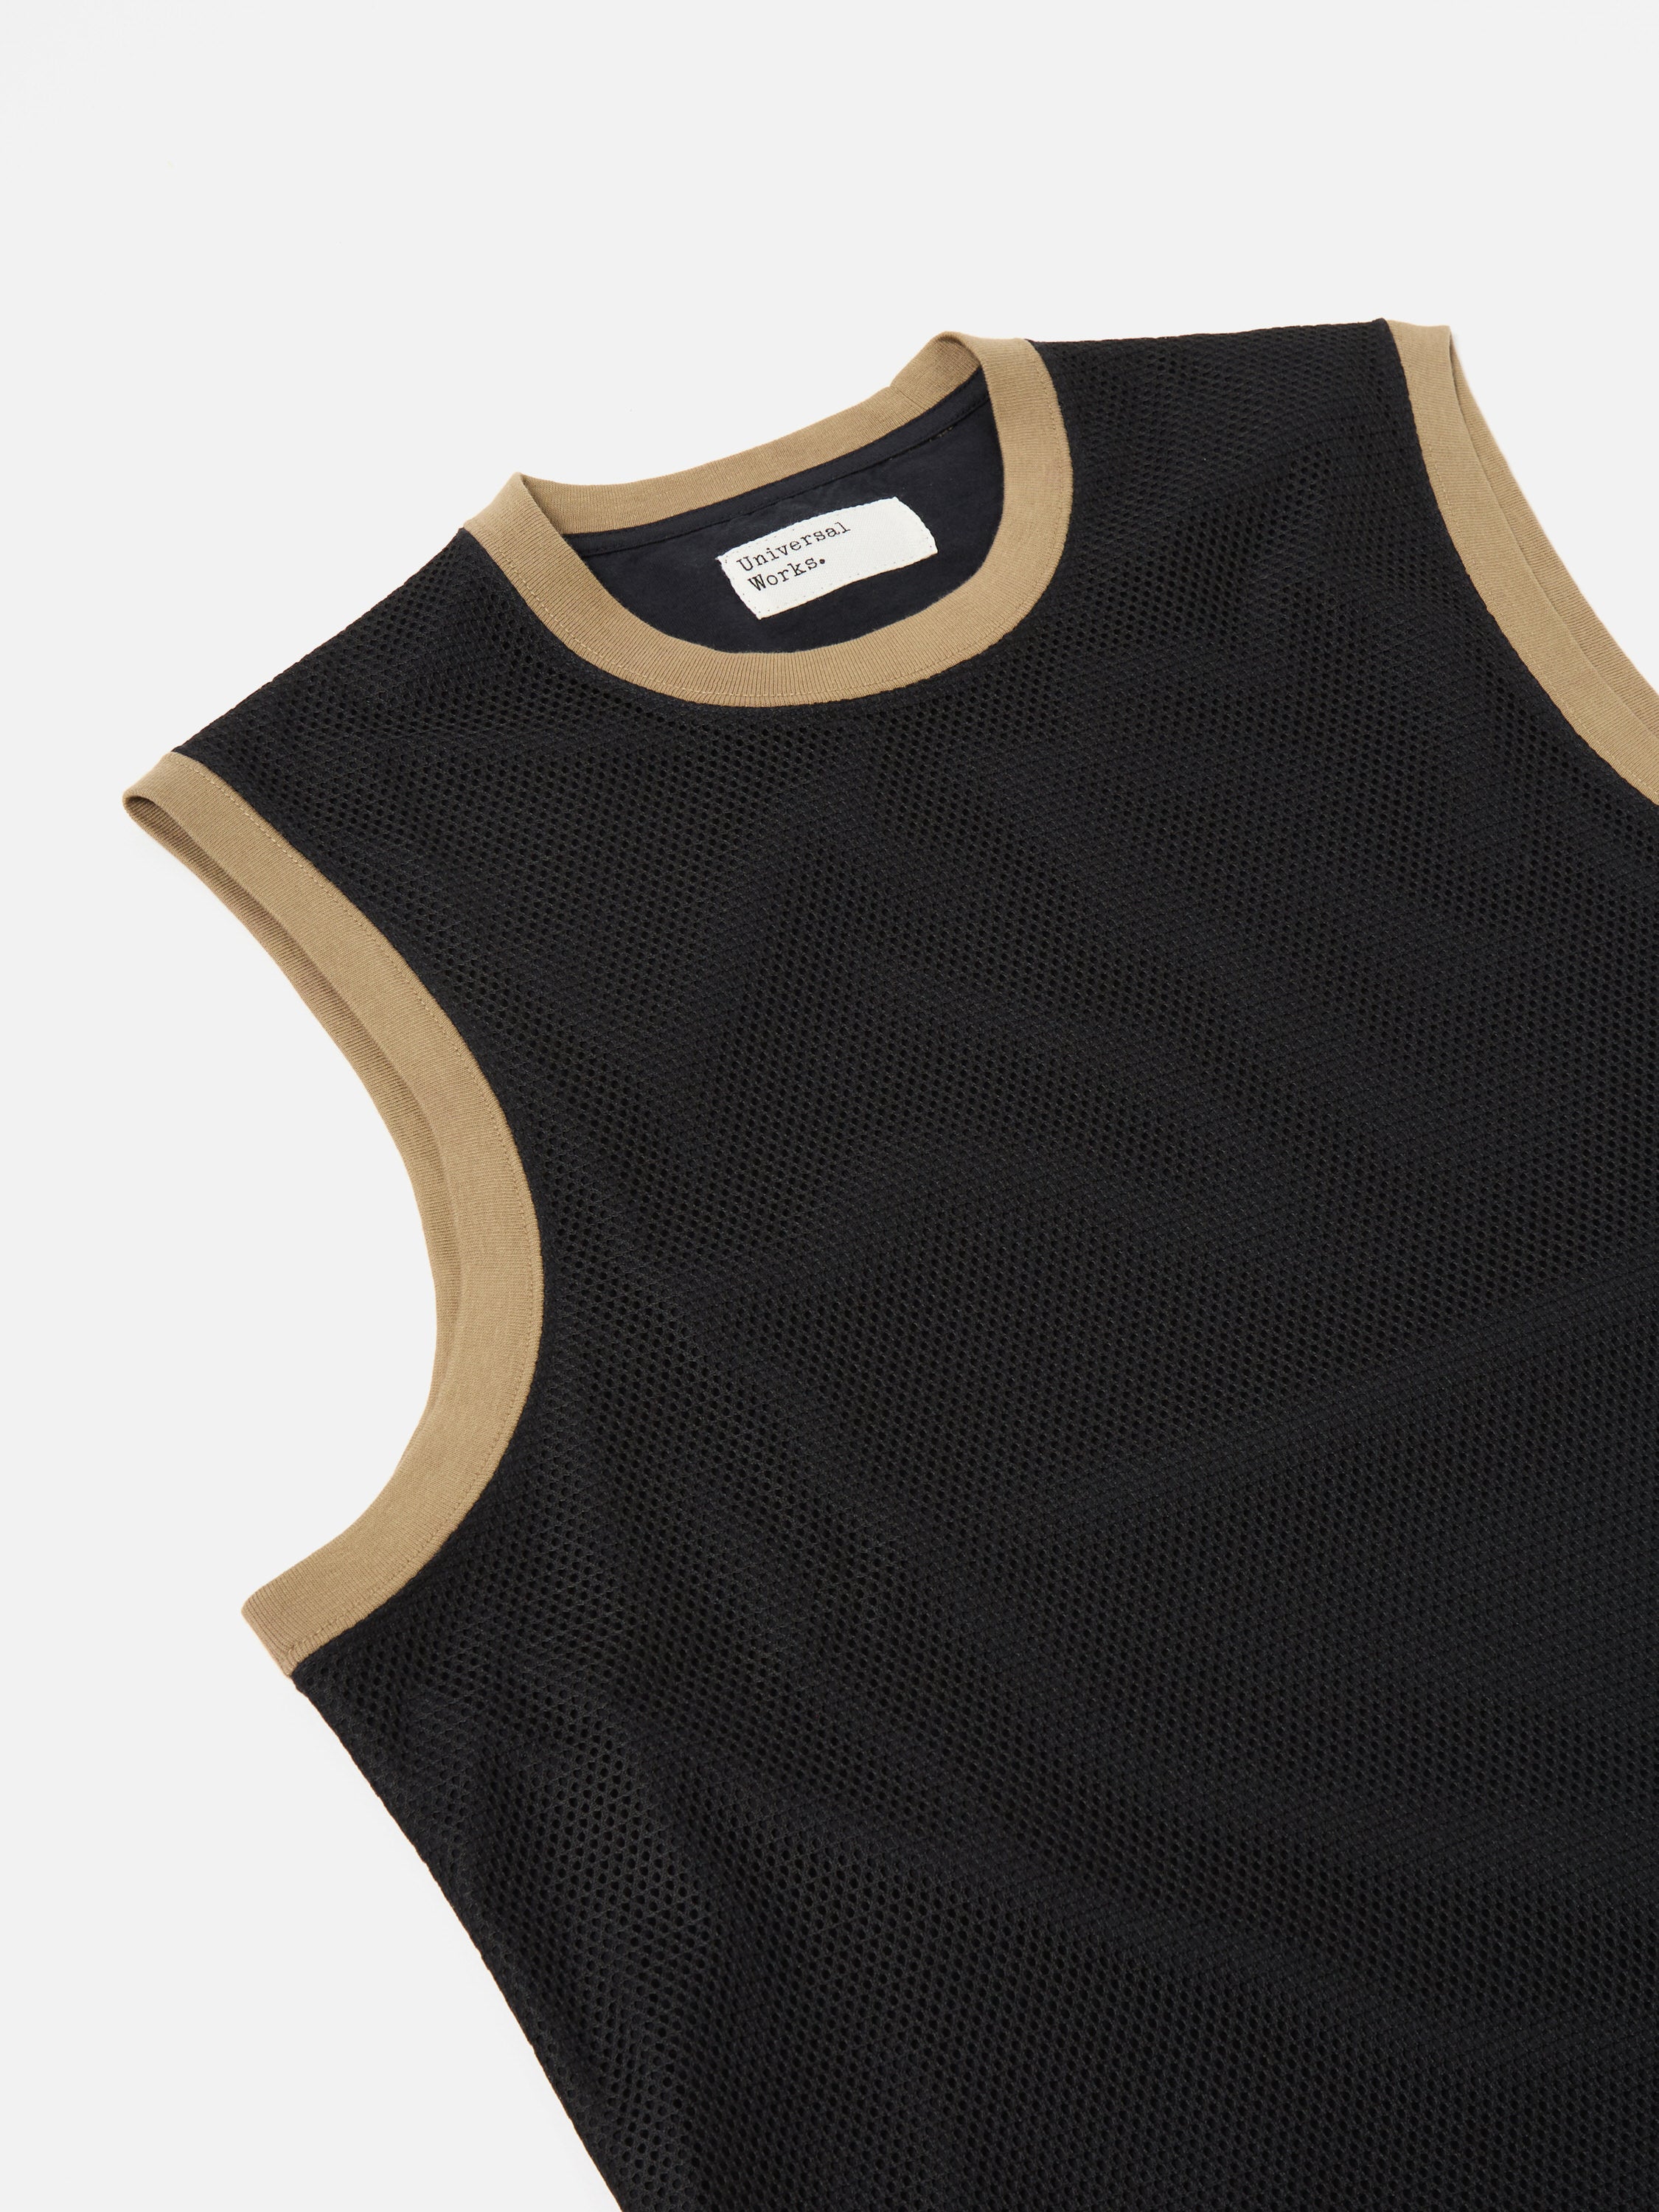 Universal Works Basketball Vest in Black/Navy Mesh/Single Jersey